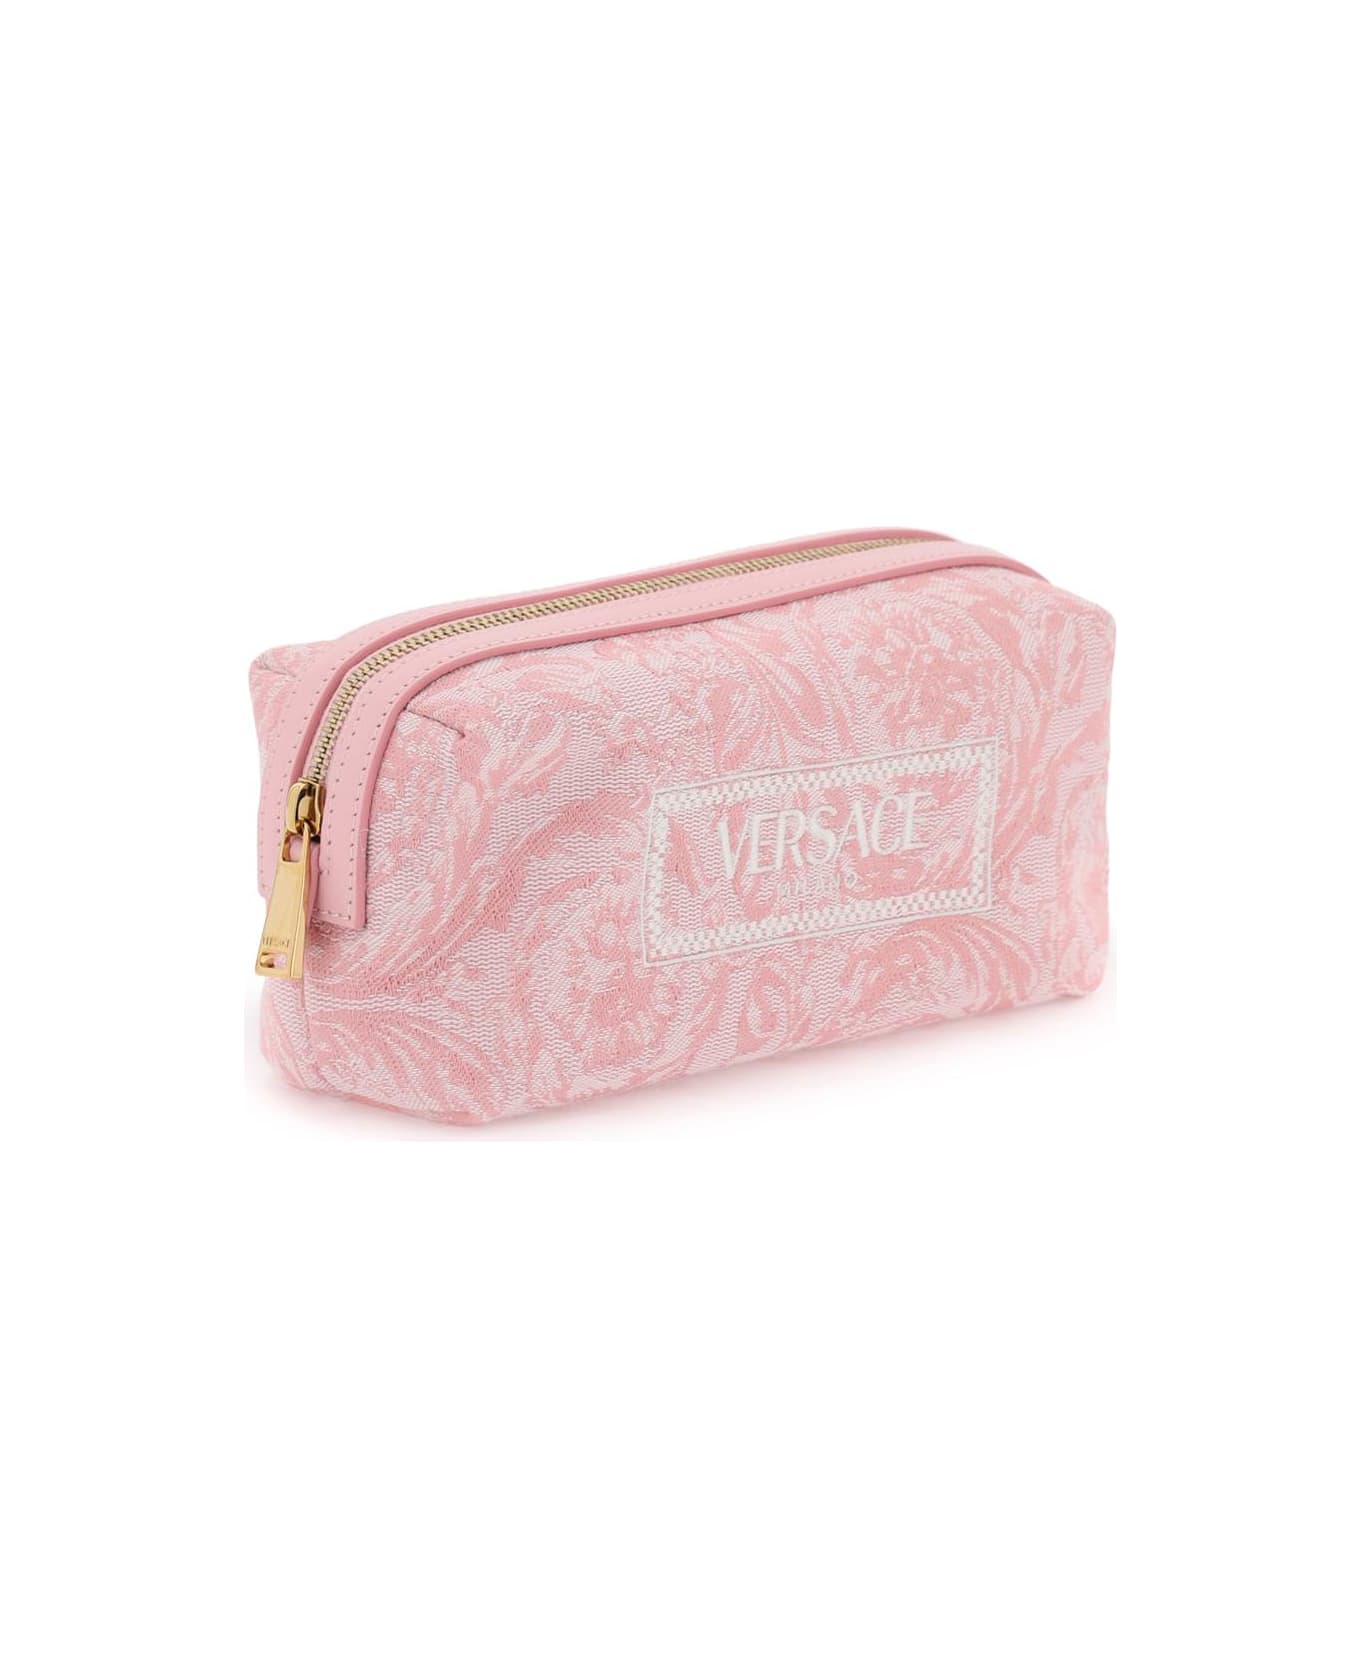 Versace Barocco Vanity Case - PALE PINK ENGLISH ROSE VE (Pink)